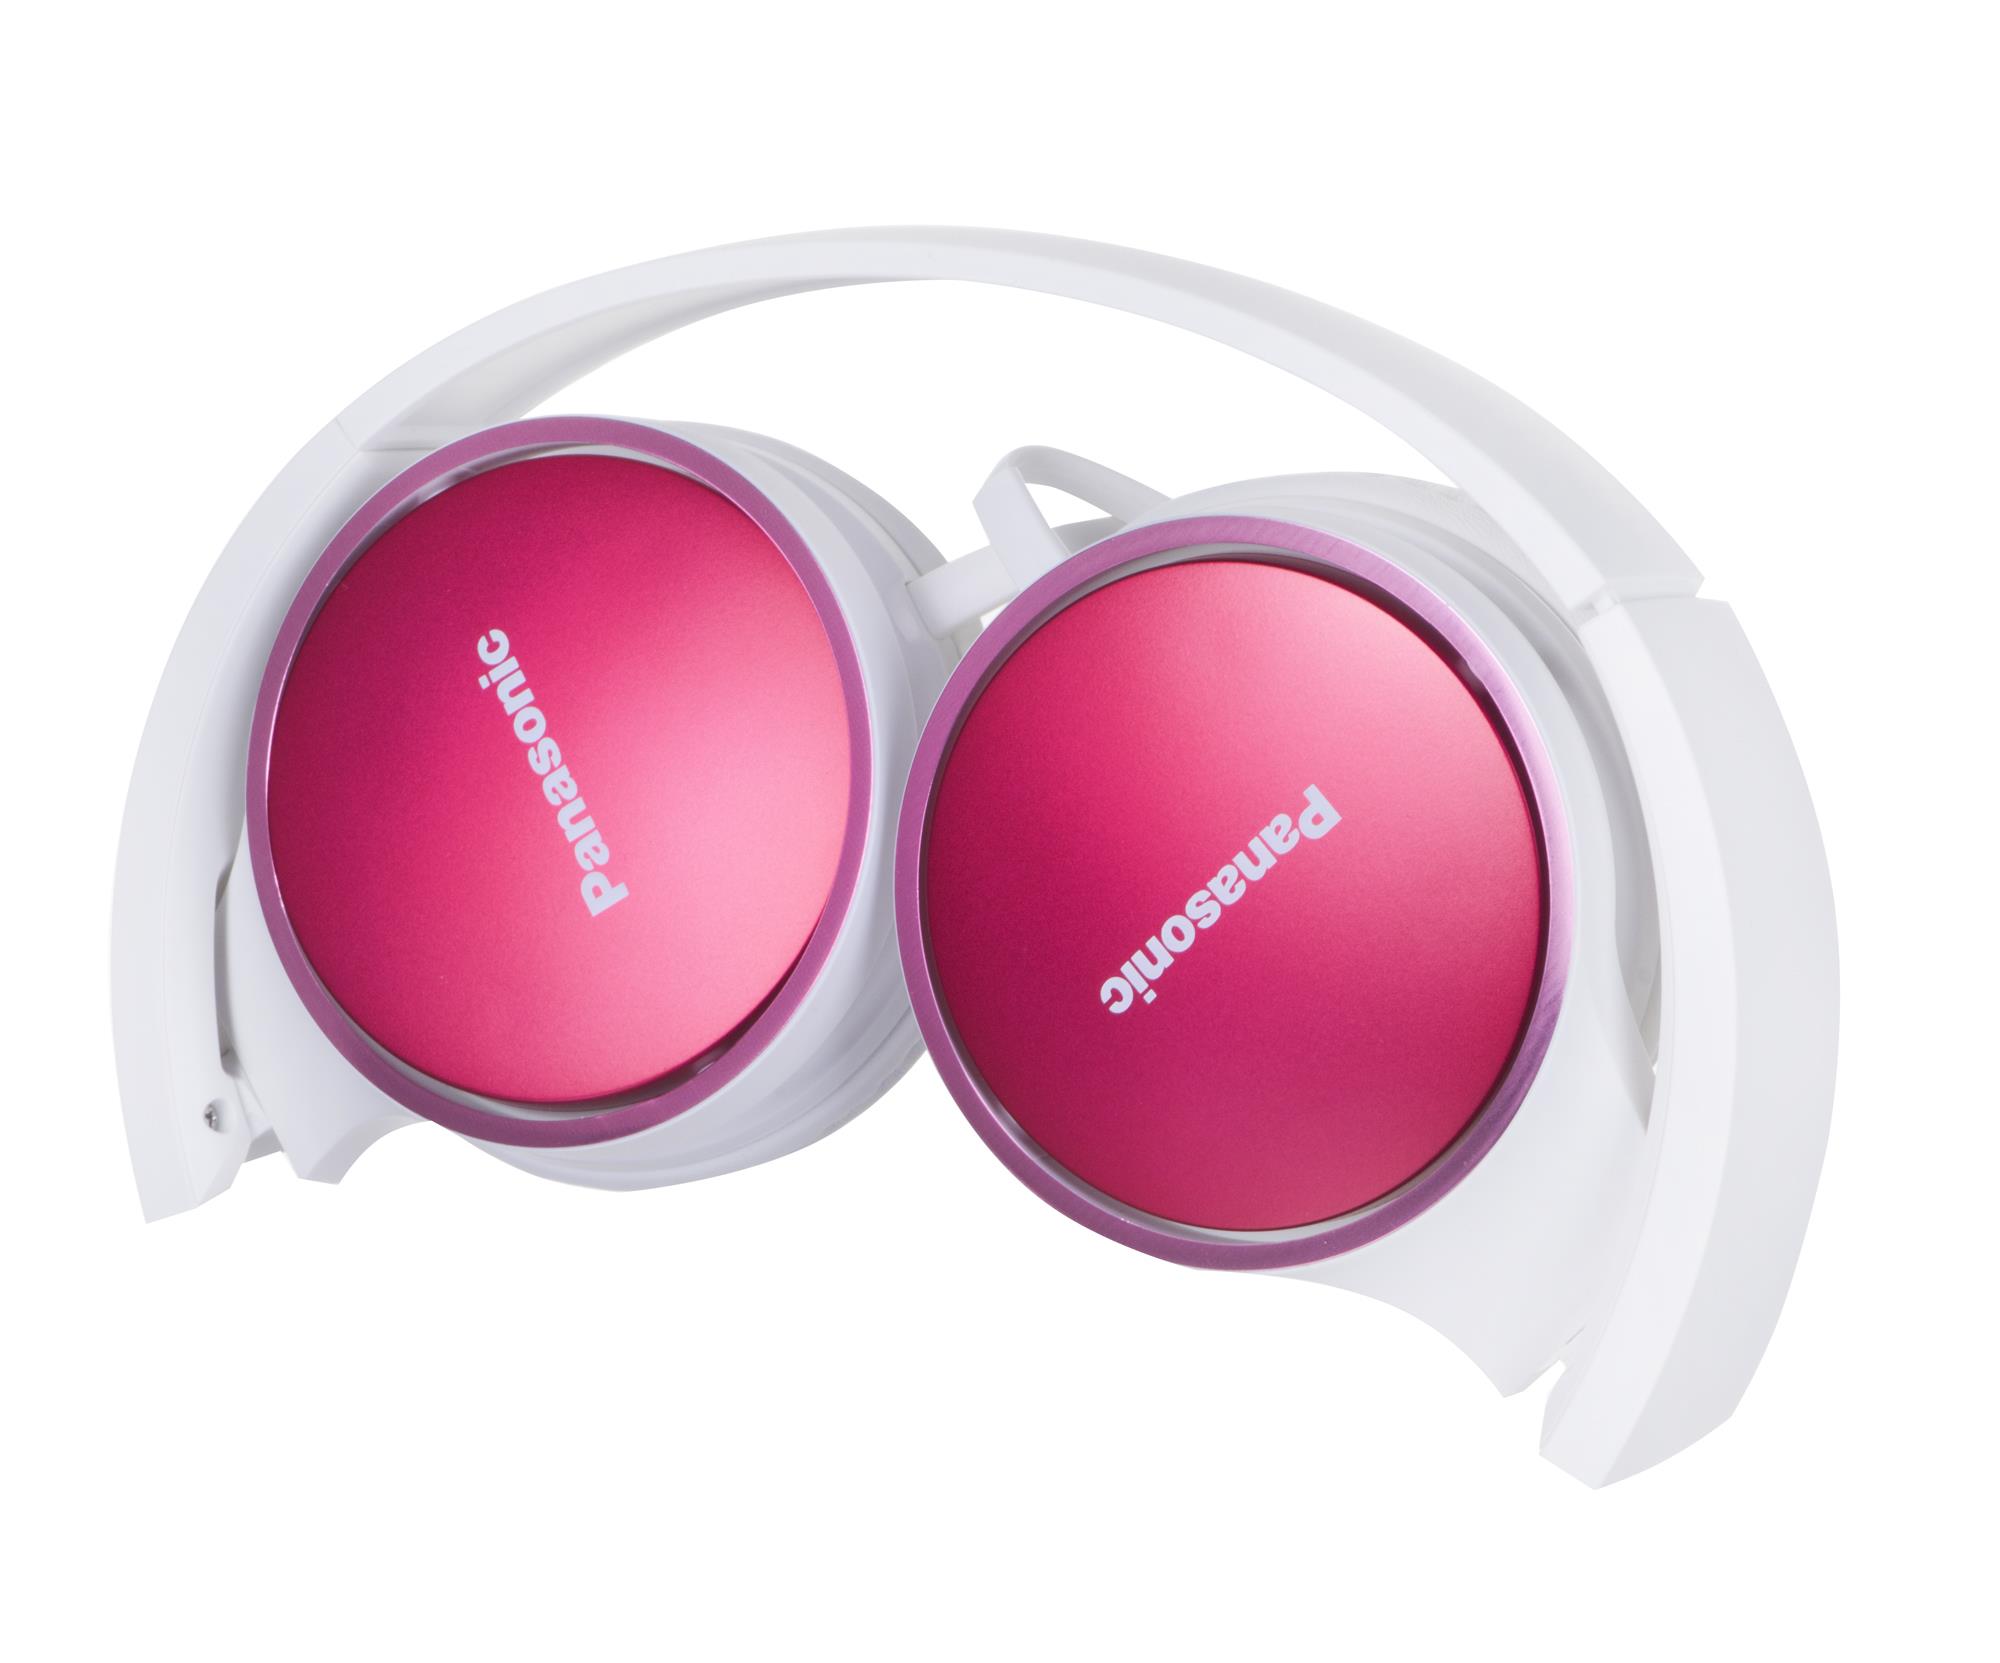 Panasonic  HF300 On-Ear Headphone, Pink Microphone, 35 Ohm, 10-25kHz austiņas